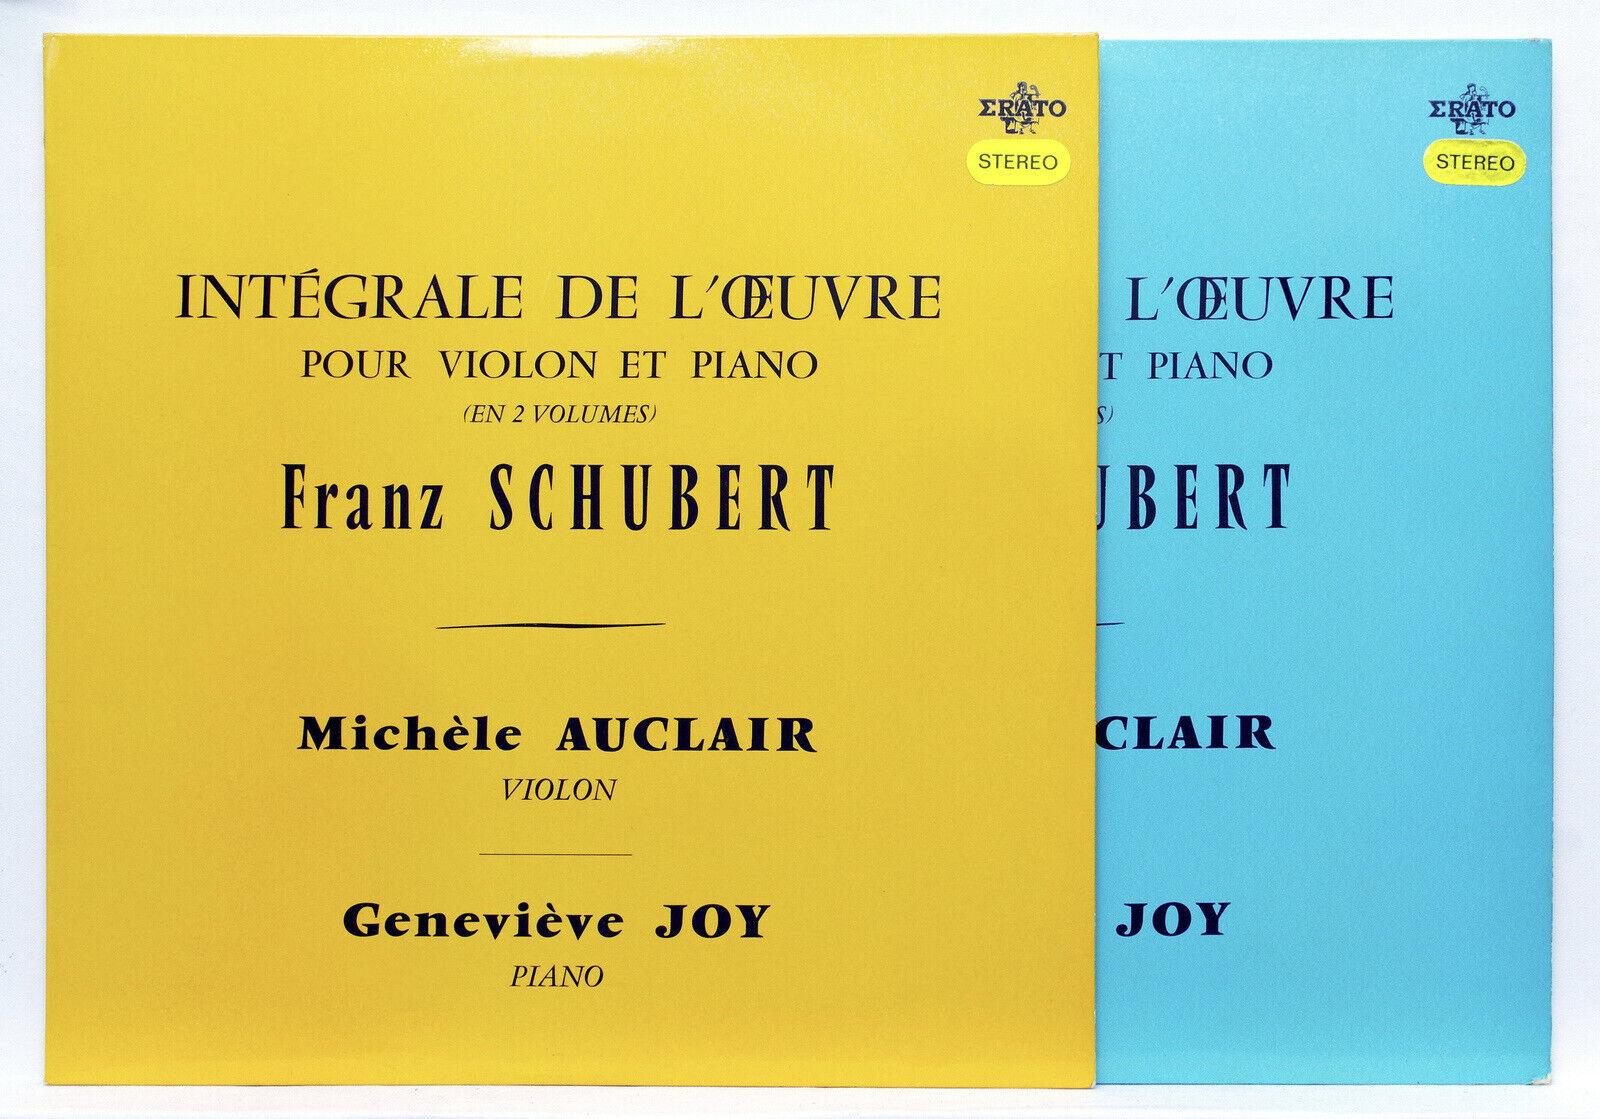 MICHELE AUCLAIR   SCHUBERT violin   piano works ERATO STE 50136 7 2xlps EX   NM